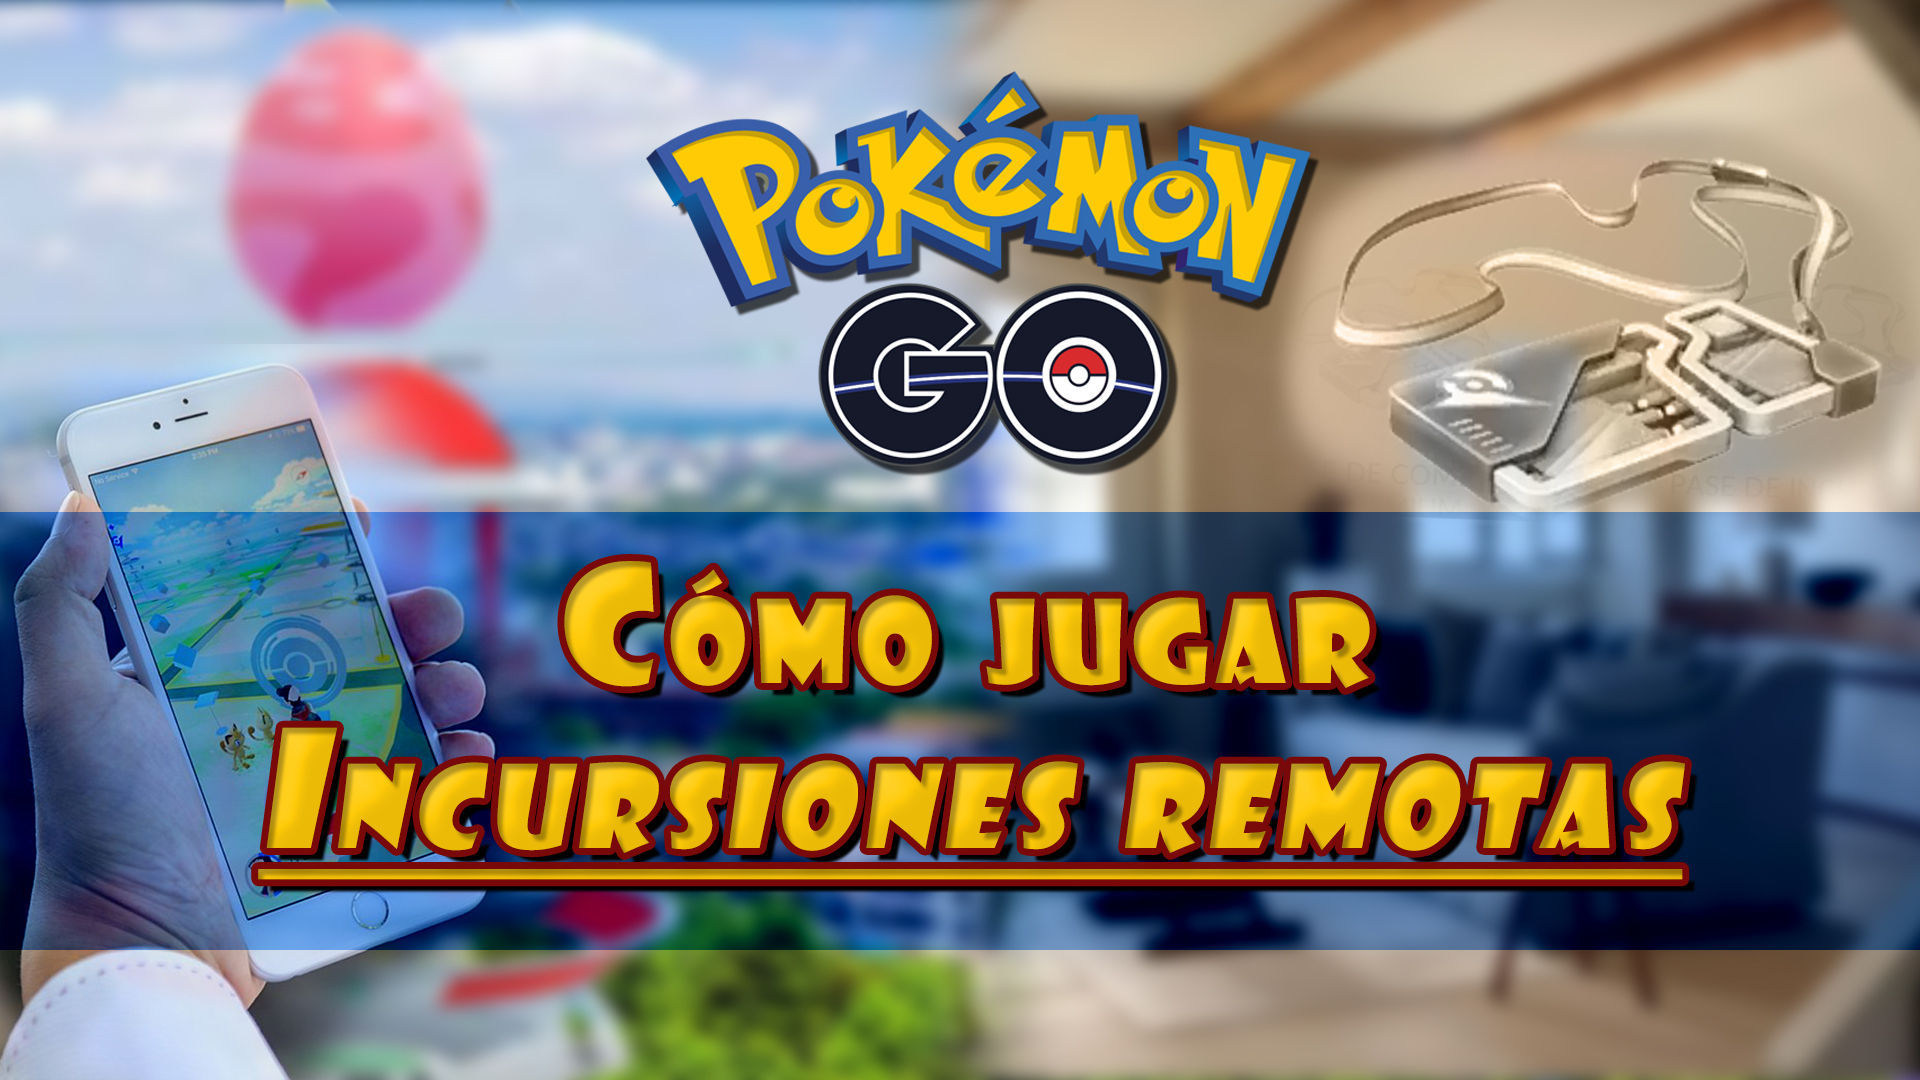 PG SHARP Coordenadas fly, Raids, Intercambios, Amistad Pokemon Go